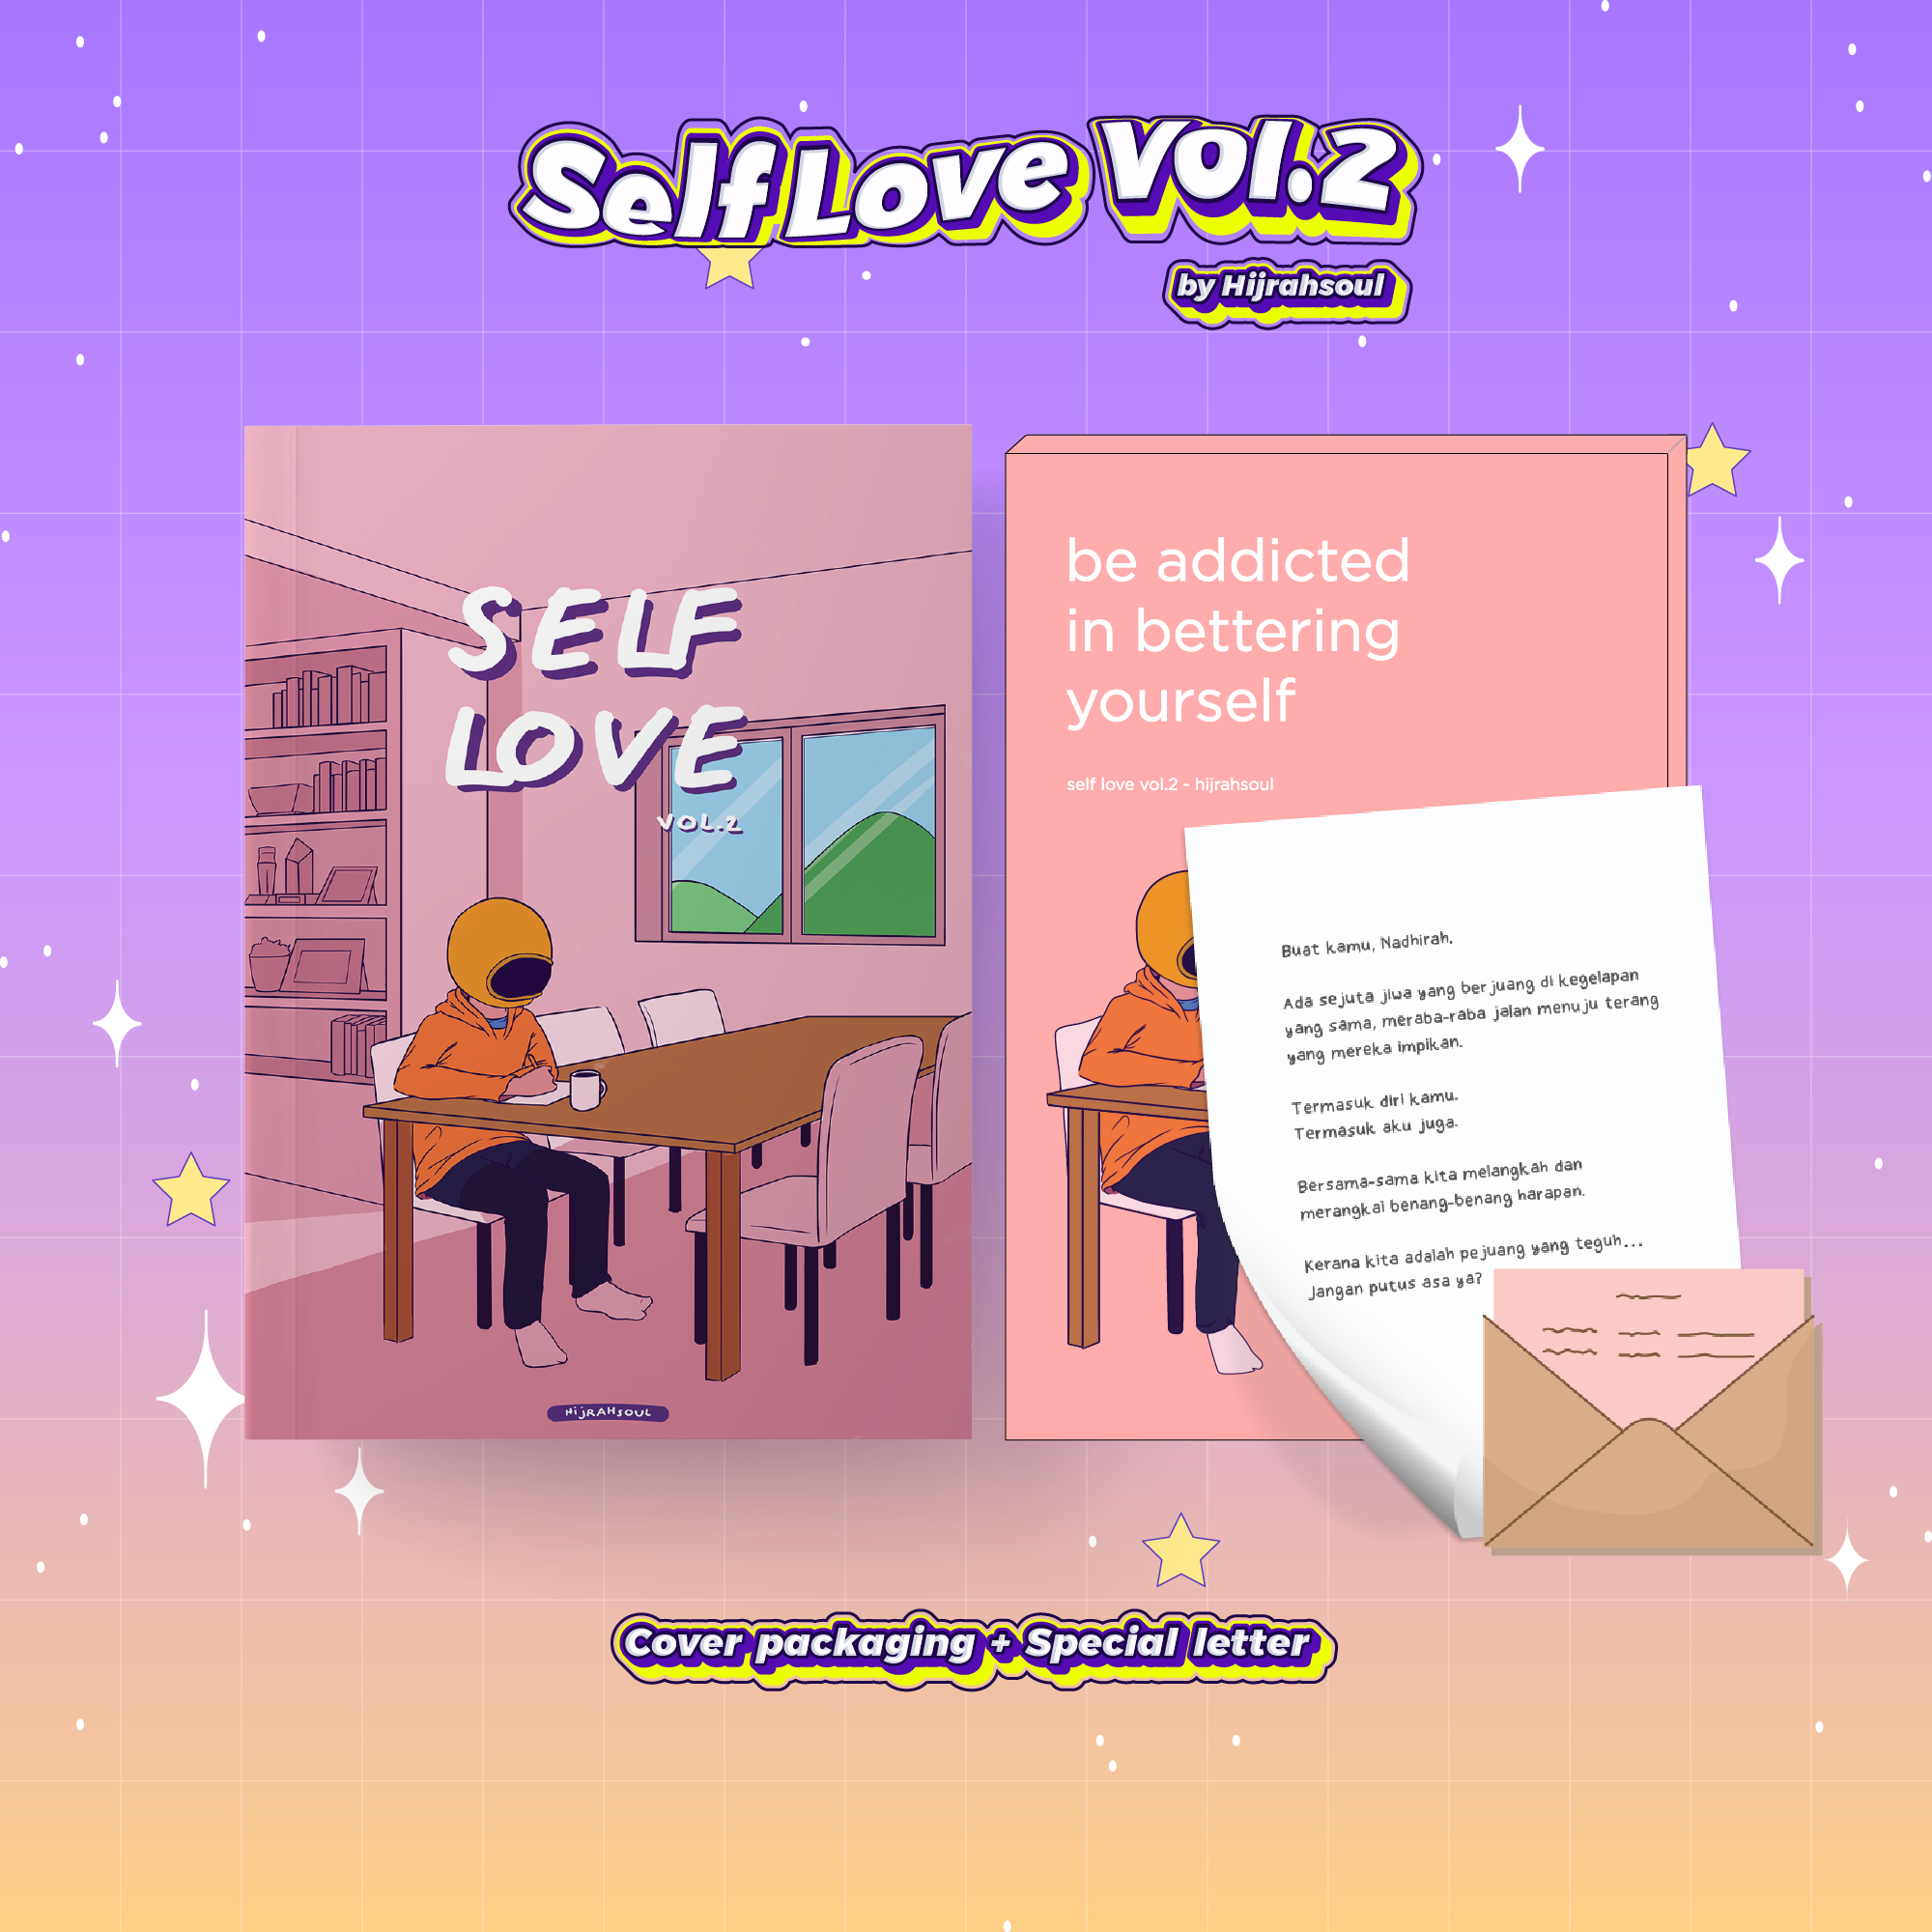 Self Love Vol.2